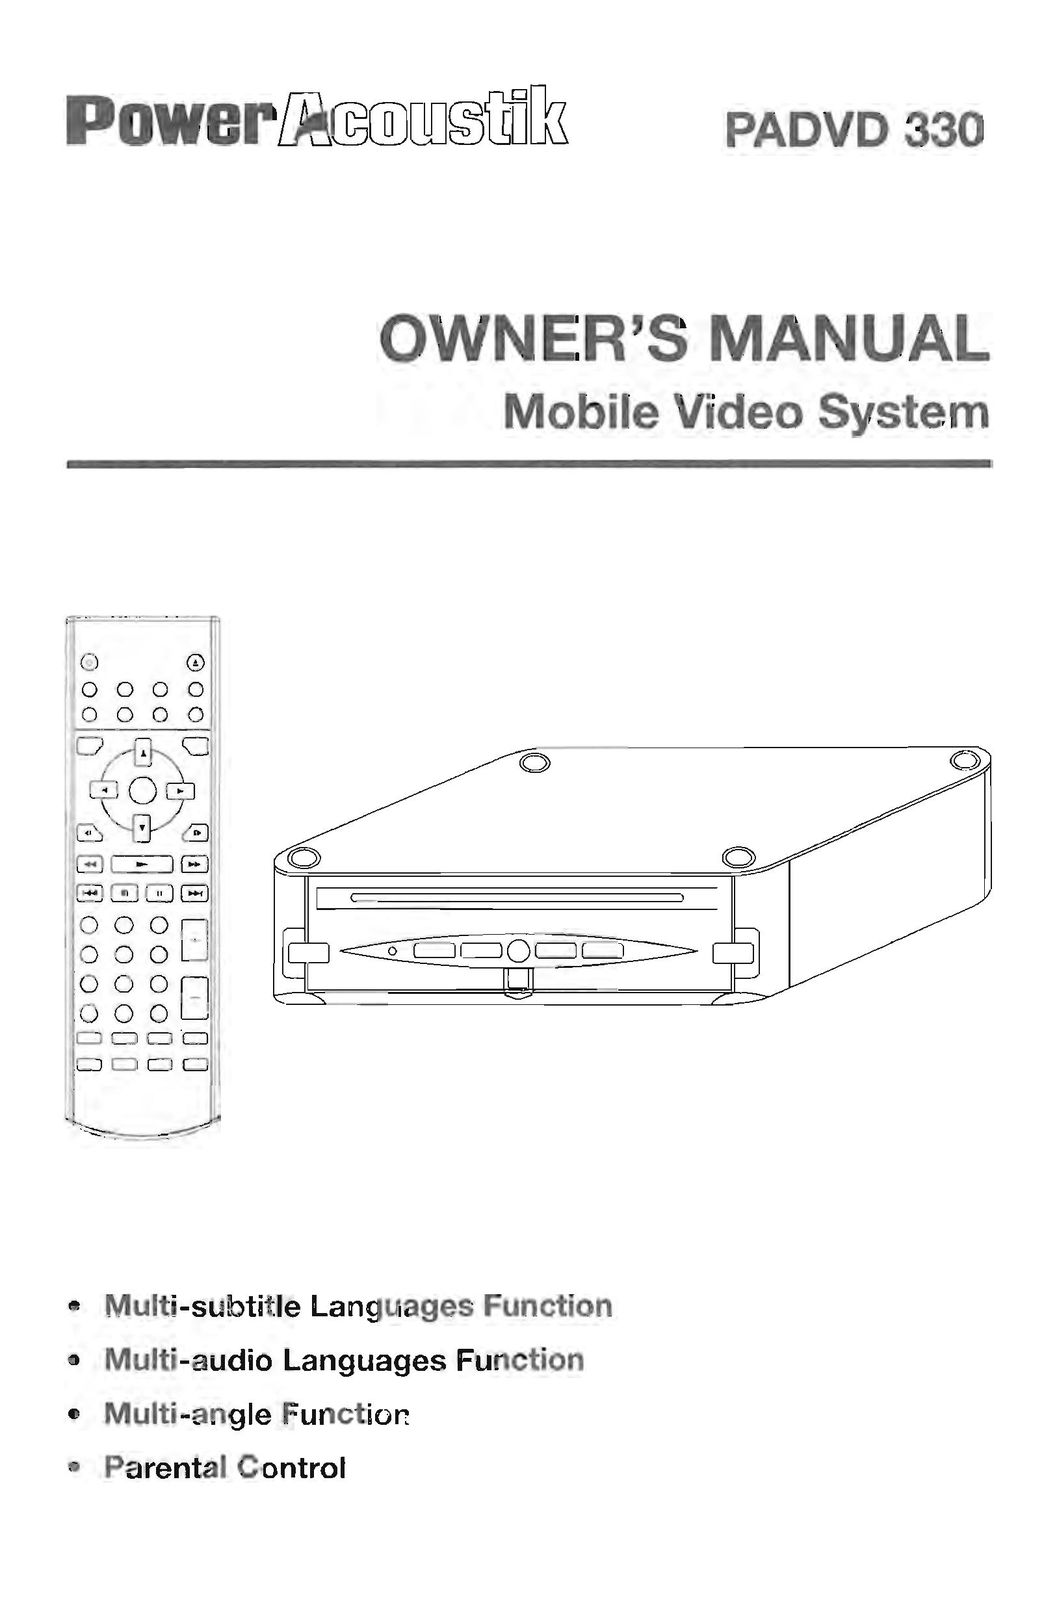 Power Acoustik paddvd 330 Car Video System User Manual